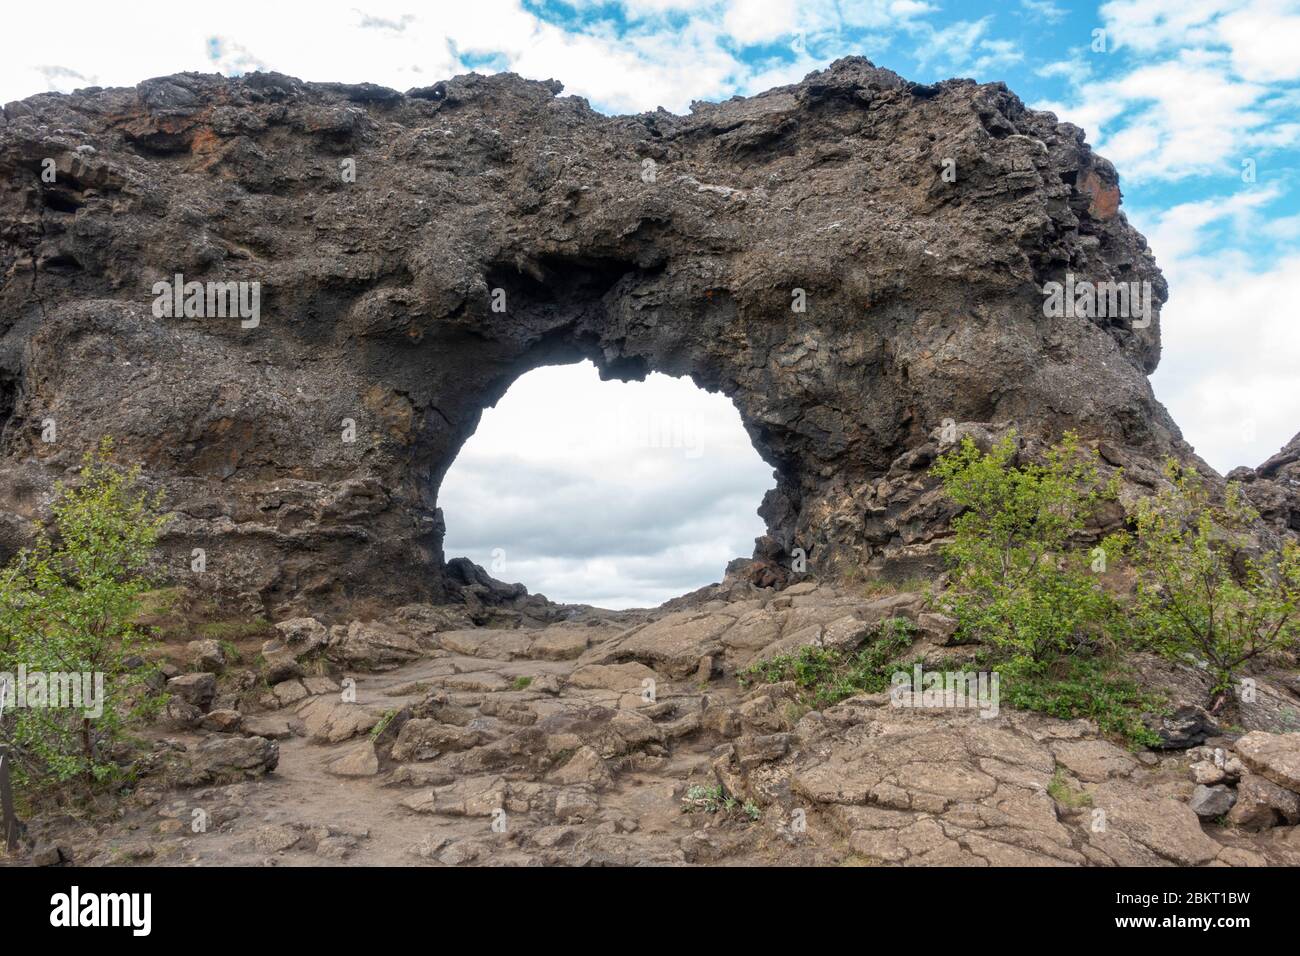 A massive lava arch in the Dimmuborgir lava field, Mývatn, Iceland. Stock Photo